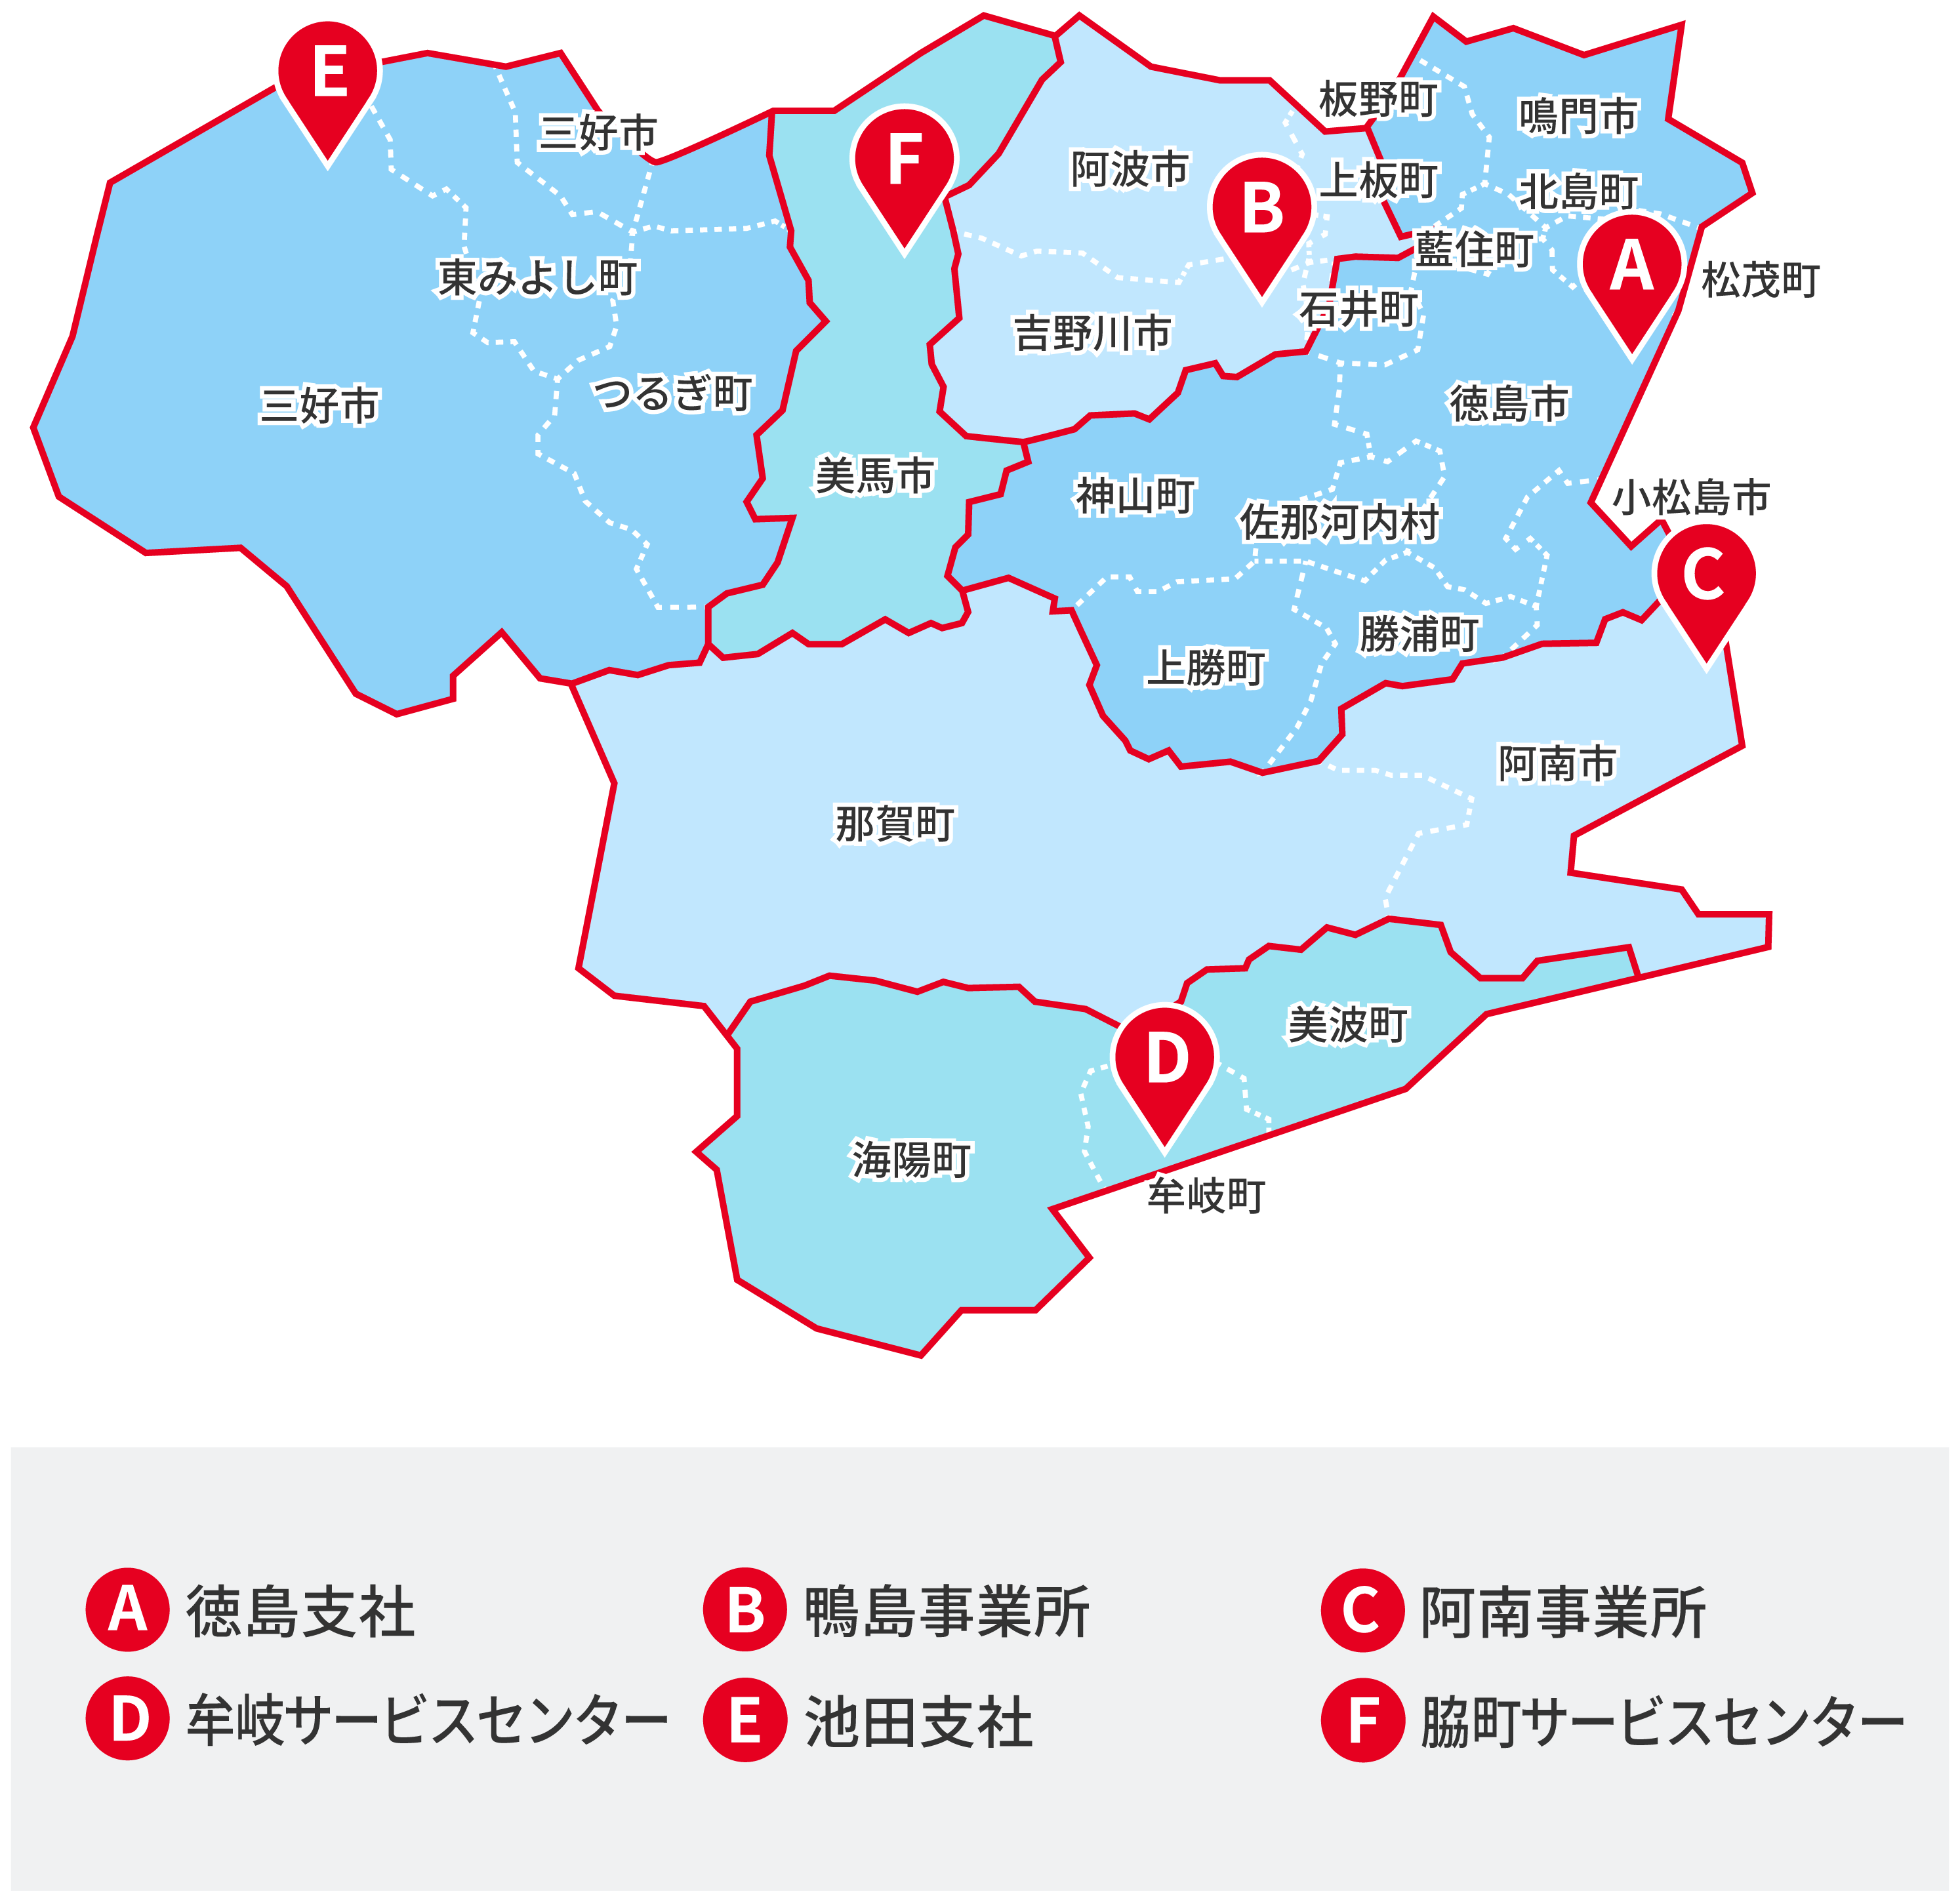 停電 電柱 電線に関する窓口 徳島県 四国電力送配電